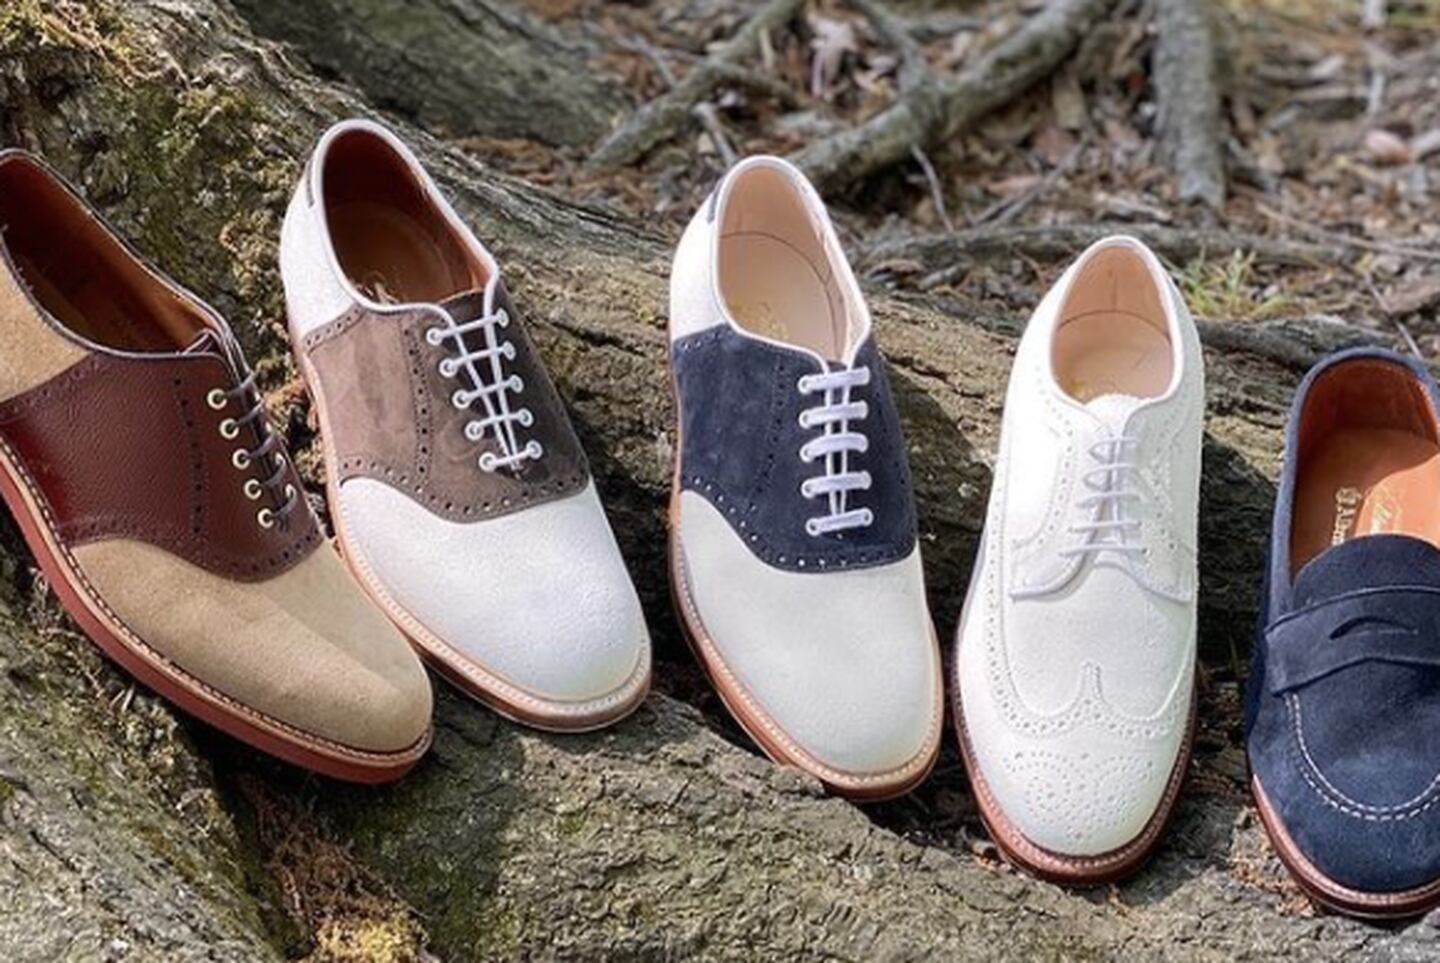 Alden Shoe Company shoes. Instagram: @aldenshoeco.